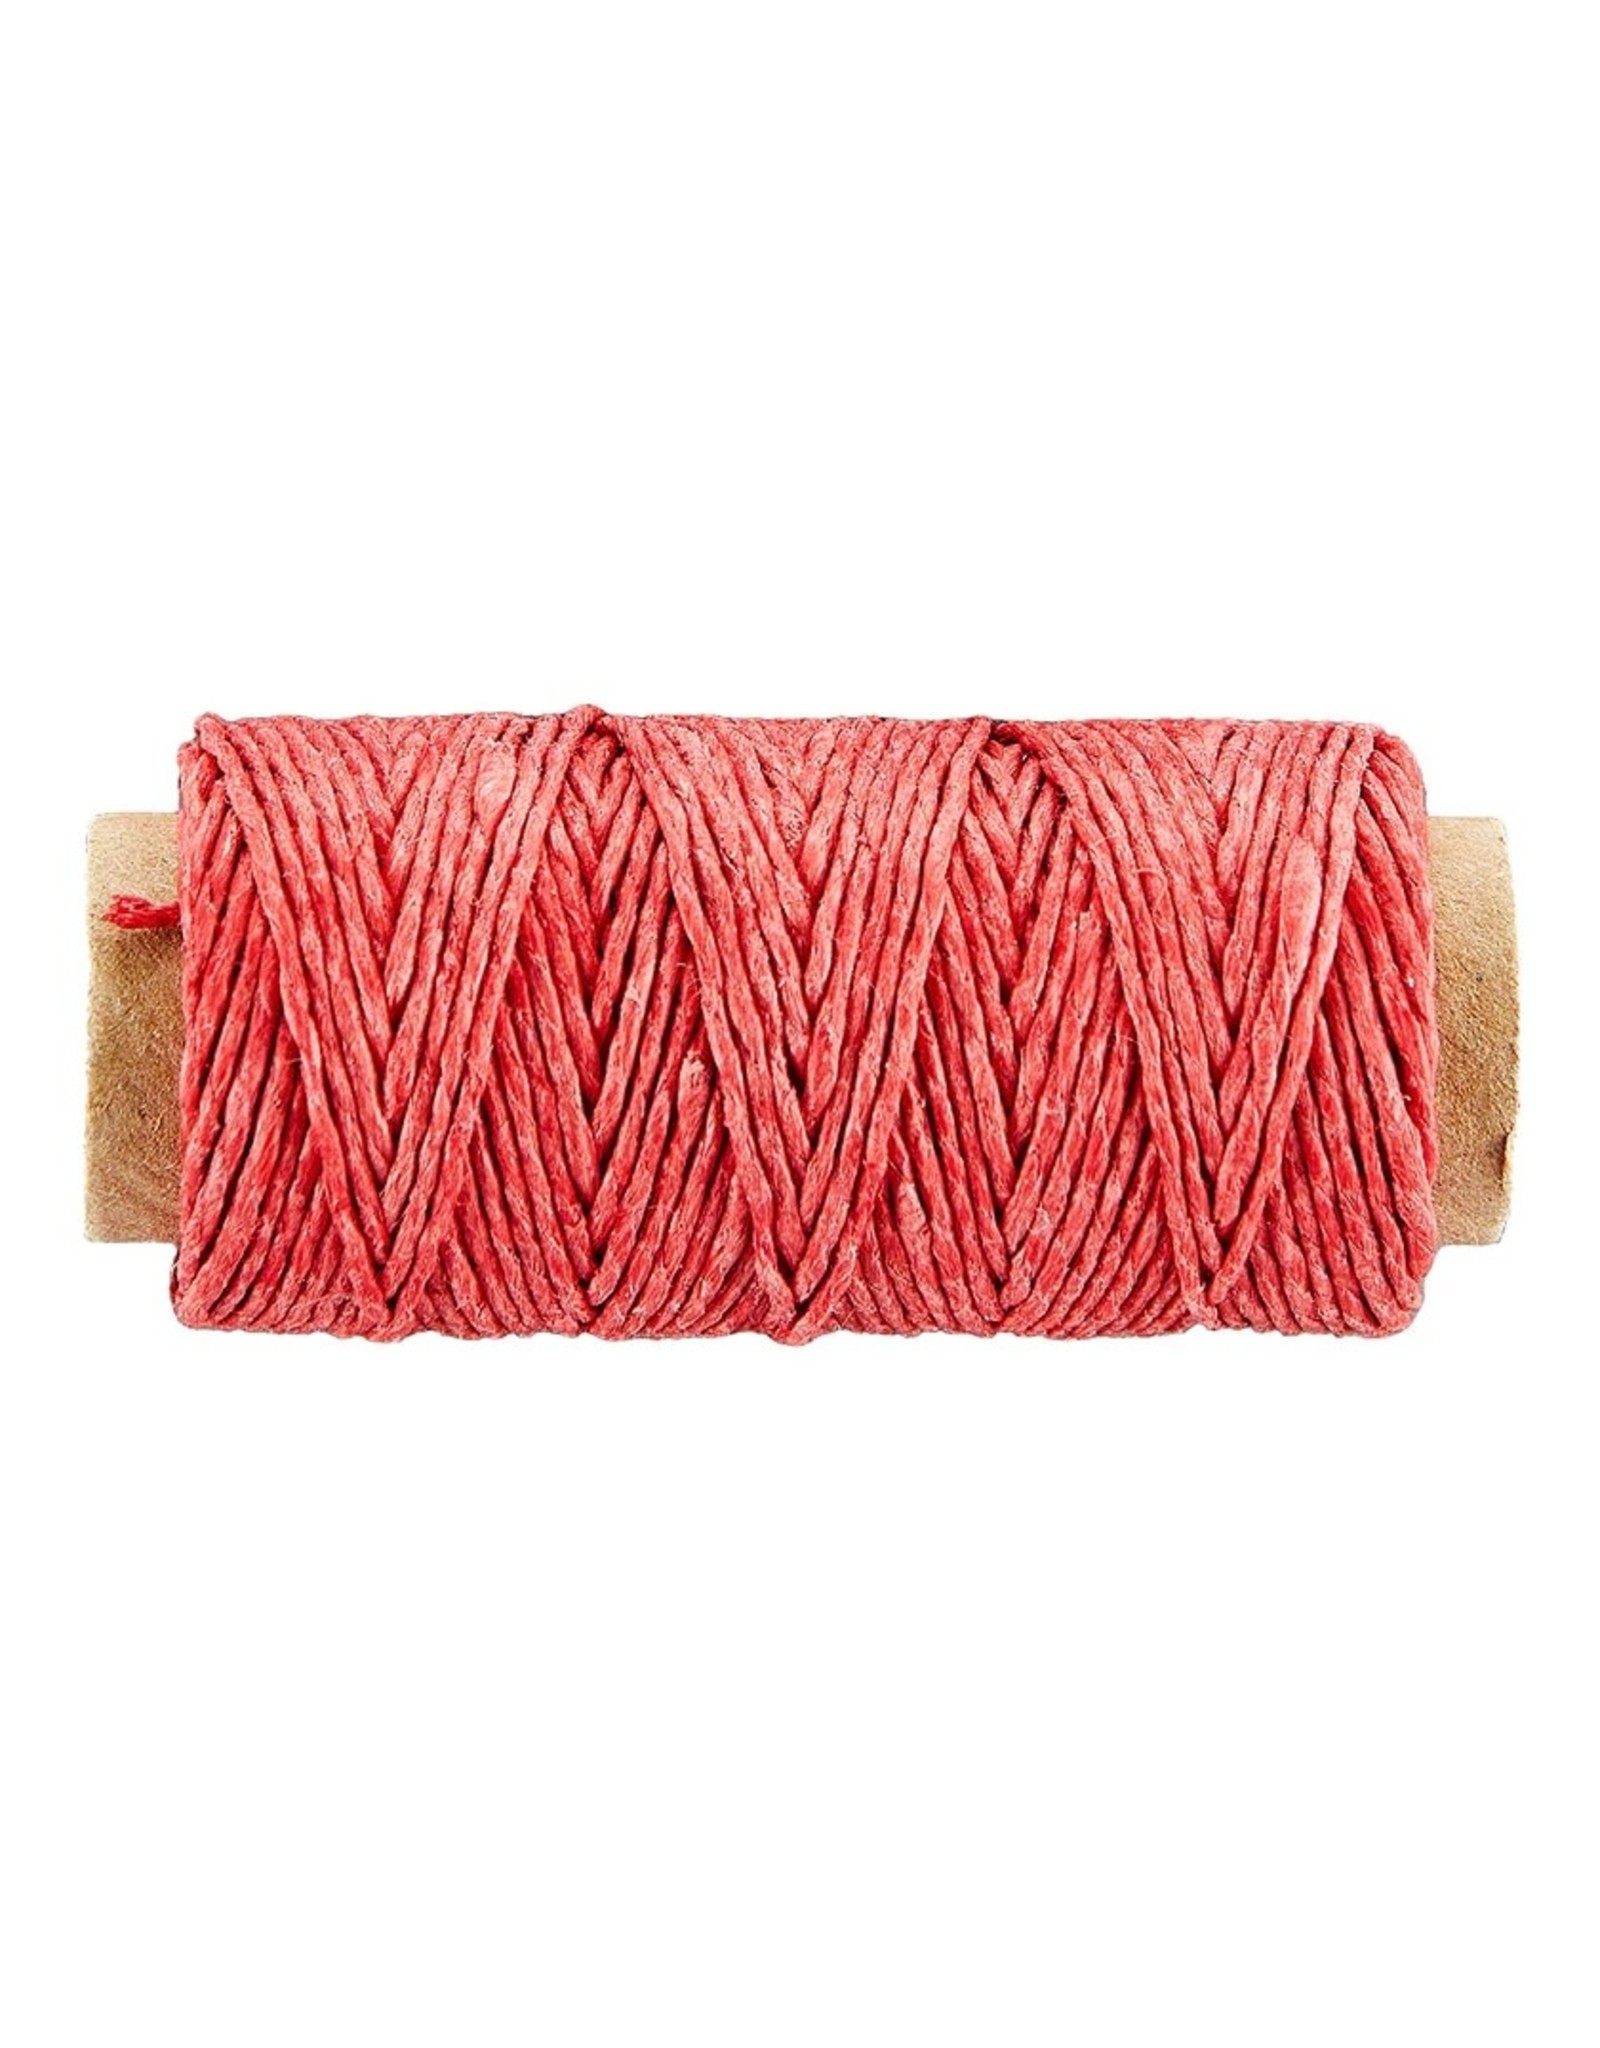 Spellbinders Sealed By Spellbinders Collection - Red Cord